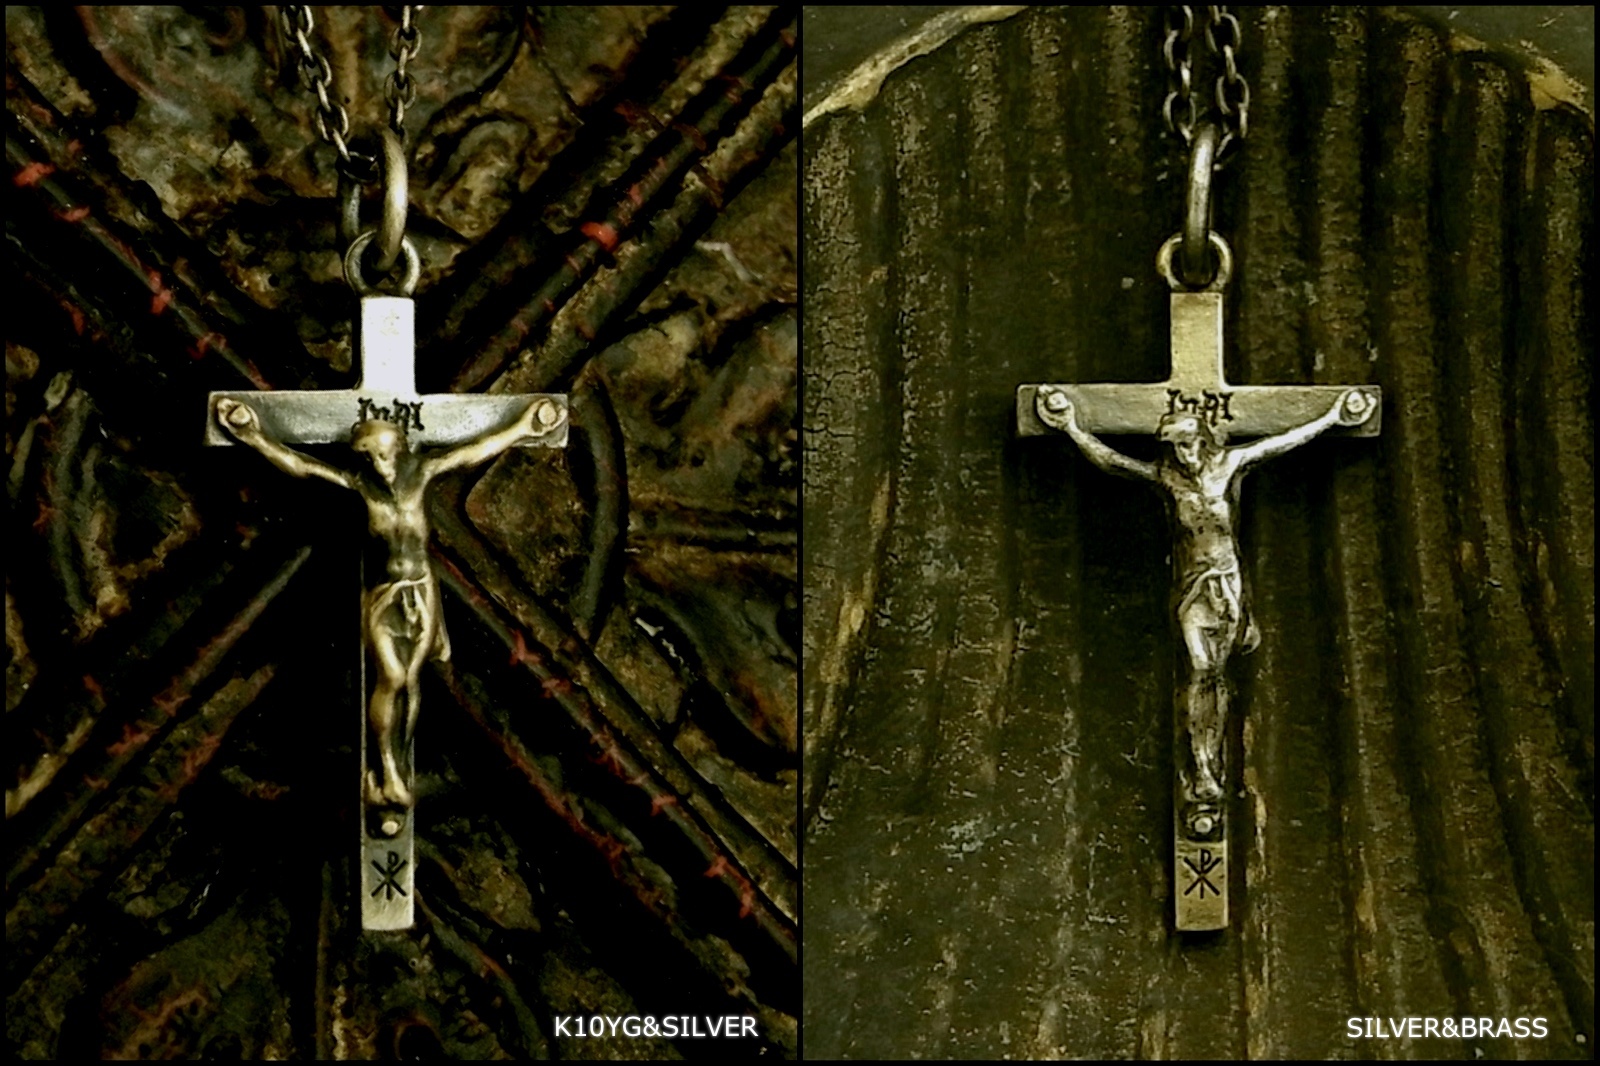 SILVER&BRASSとK10YG&SILVER【Jesus Necklace】